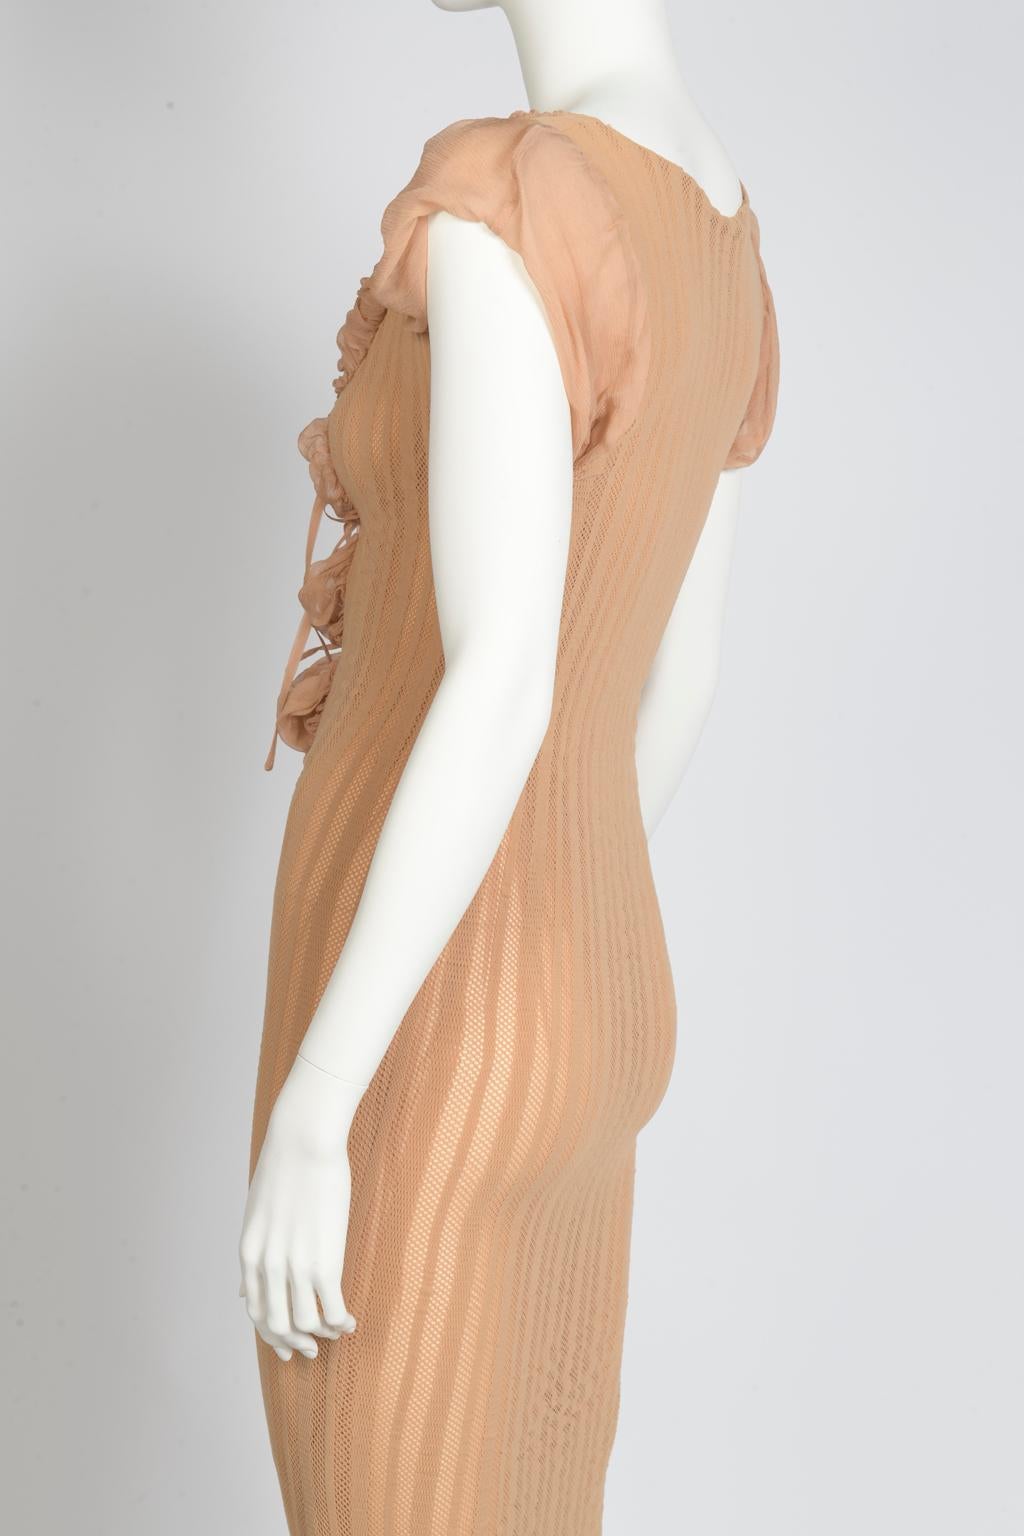 Jean Paul Gaultier Runway Sheer Nude Mesh Maxi Dress, Spring-Summer 2001 For Sale 9